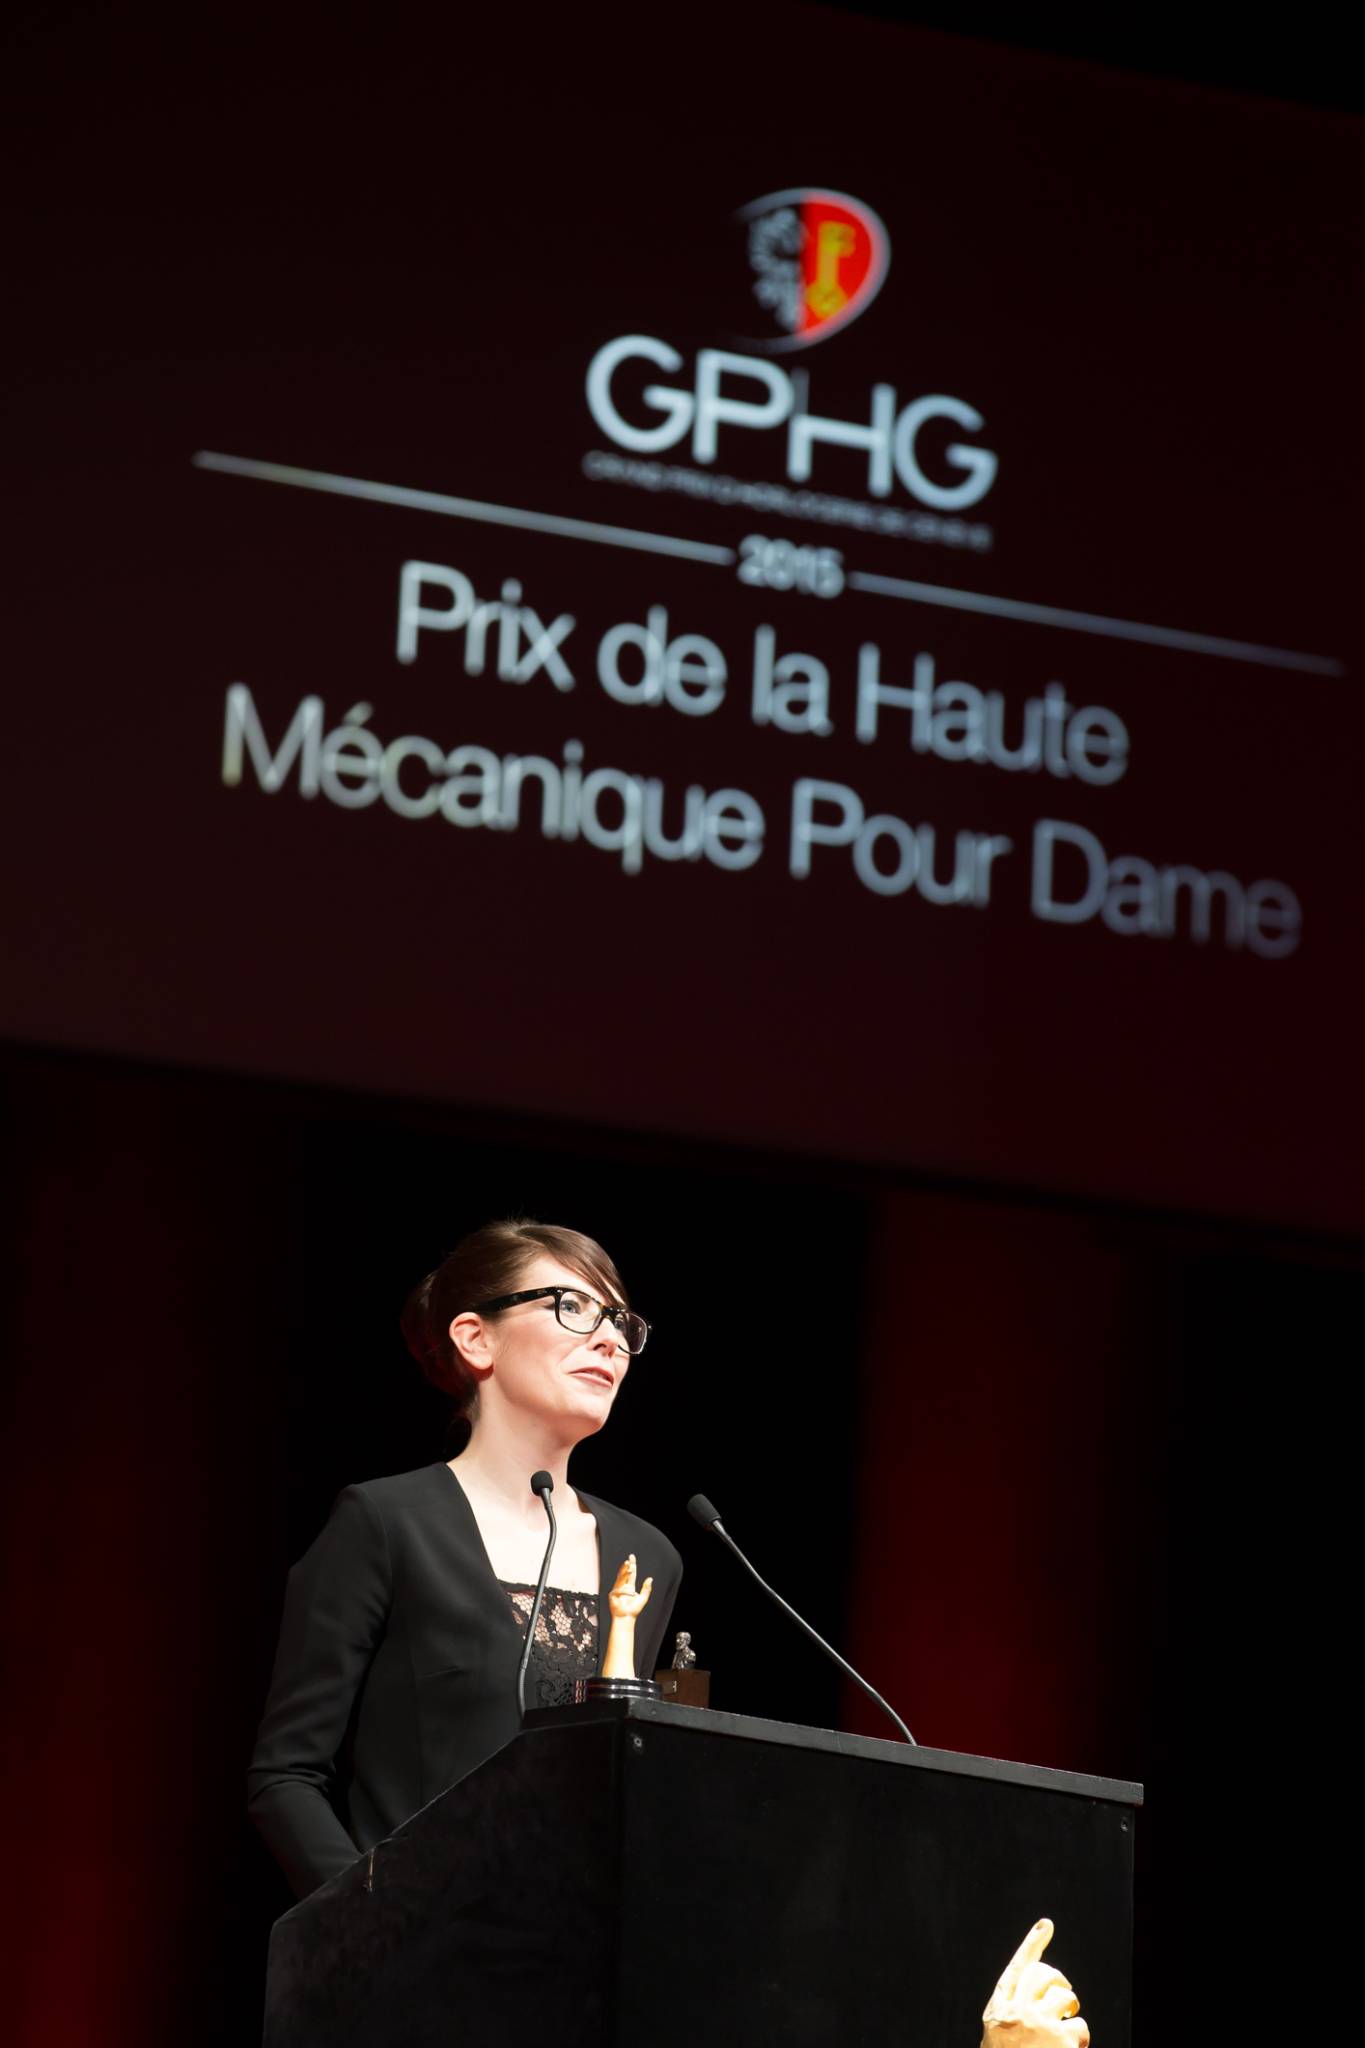 Aurélie Picaud (Timepieces Director of Fabergé, winner of the Ladies’ High-Mech Watch Prize 2015)